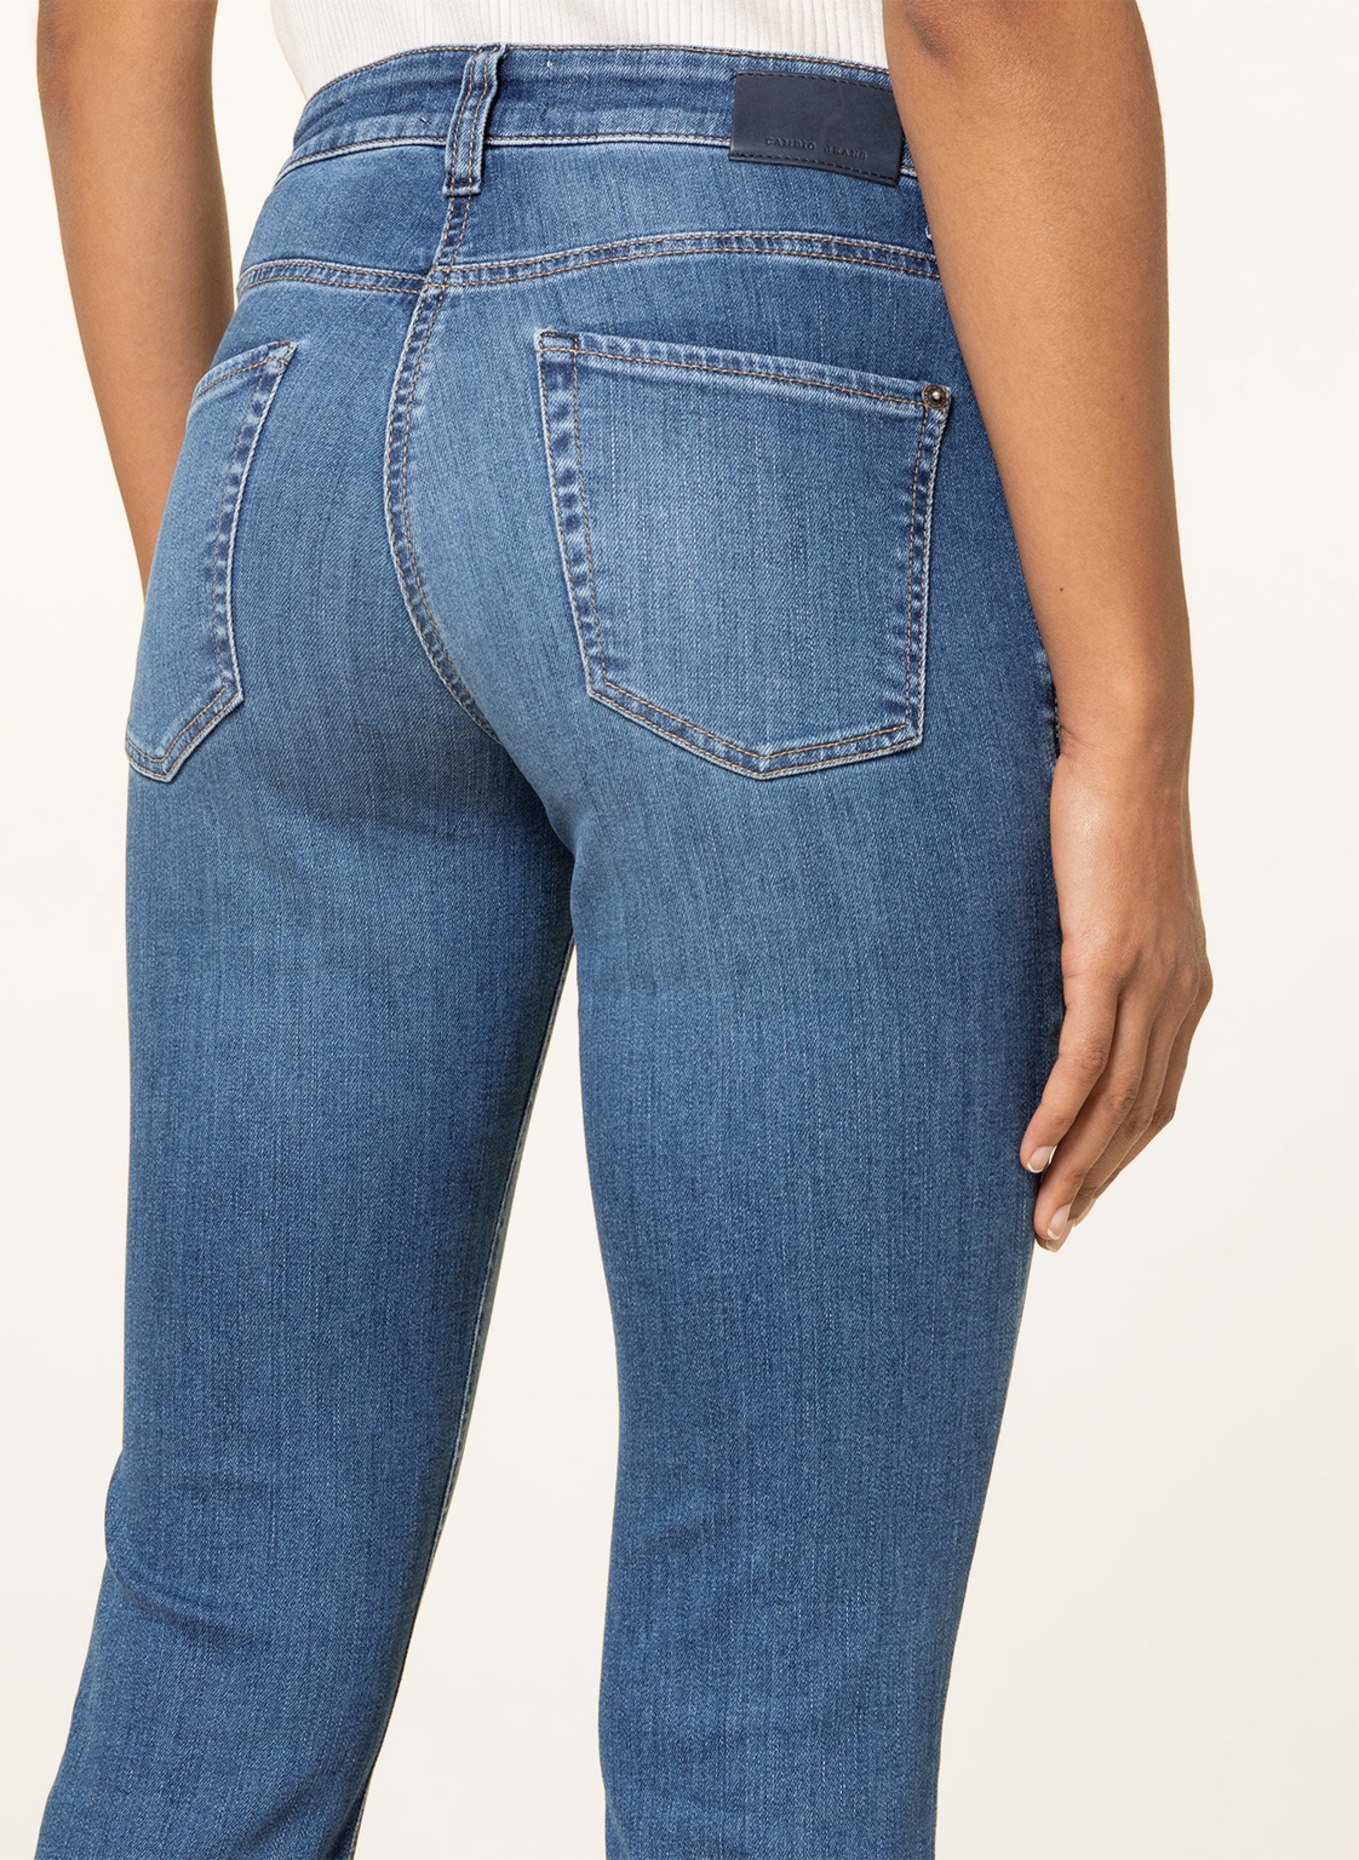 CAMBIO Skinny Jeans PARIS , Farbe: 5102 medium contrast splinted (Bild 5)